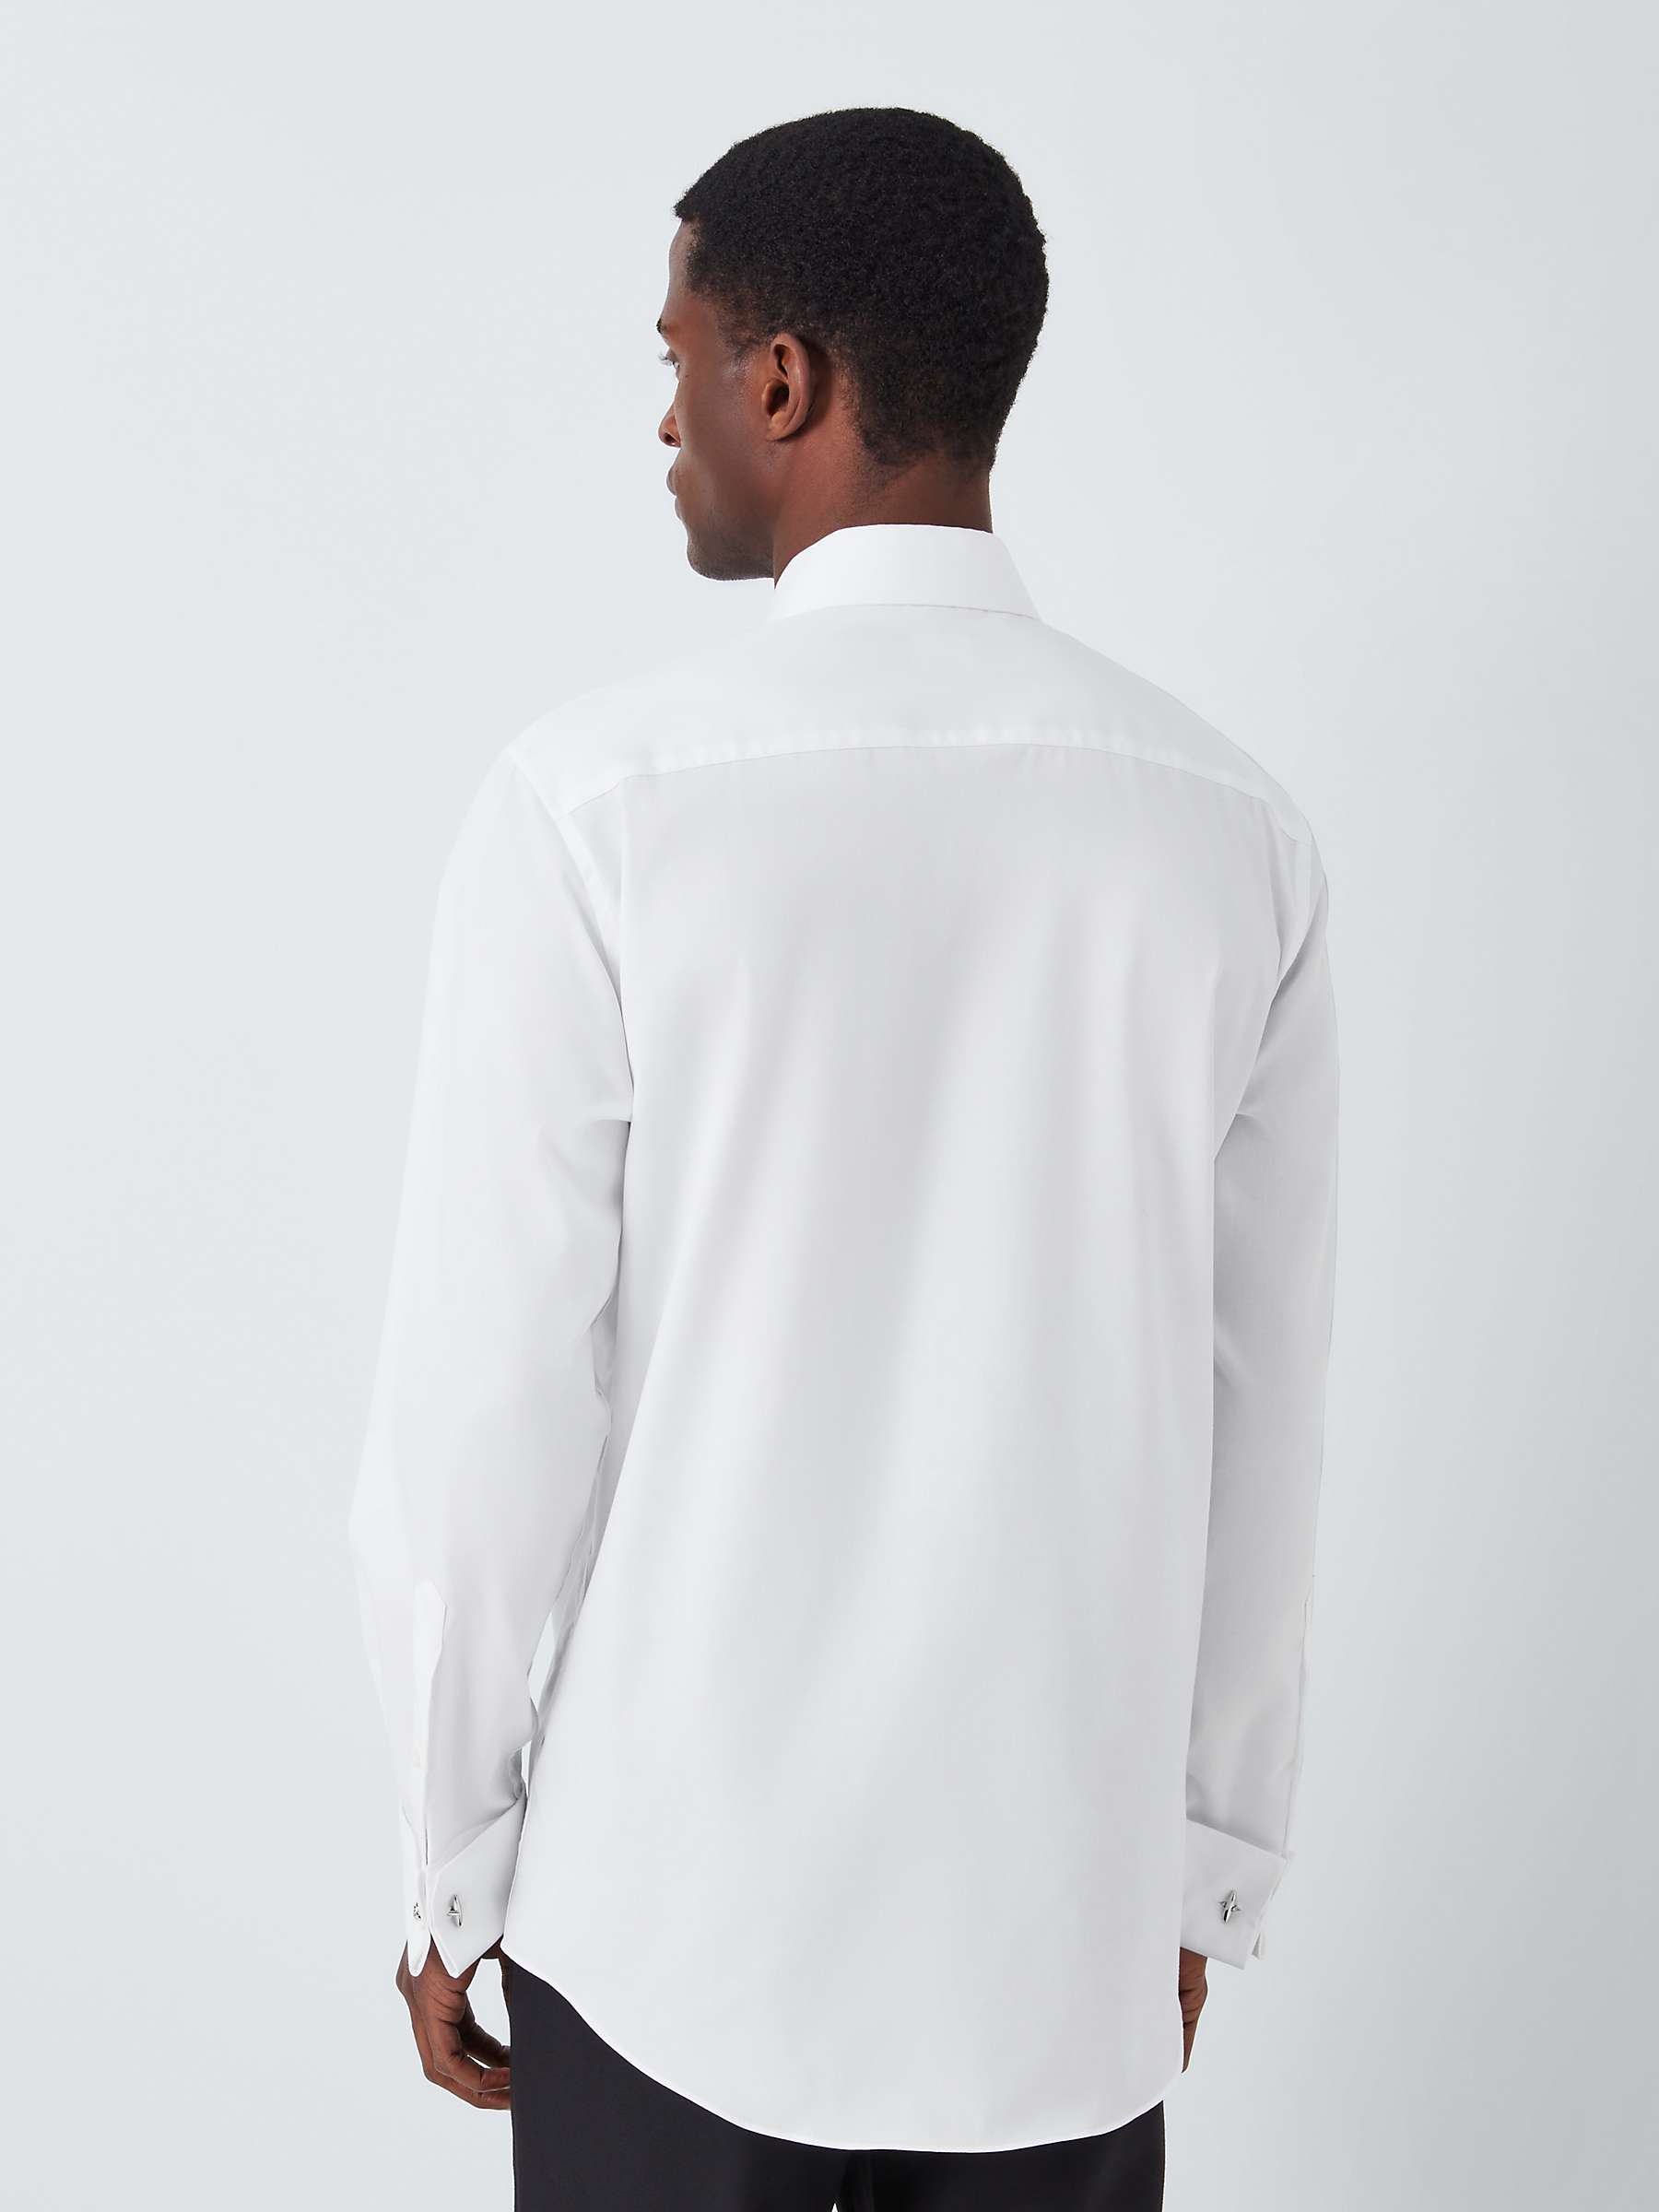 Buy John Lewis Marcella Point Collar Tailored Fit Dresswear Kit Dress Shirt, White Online at johnlewis.com